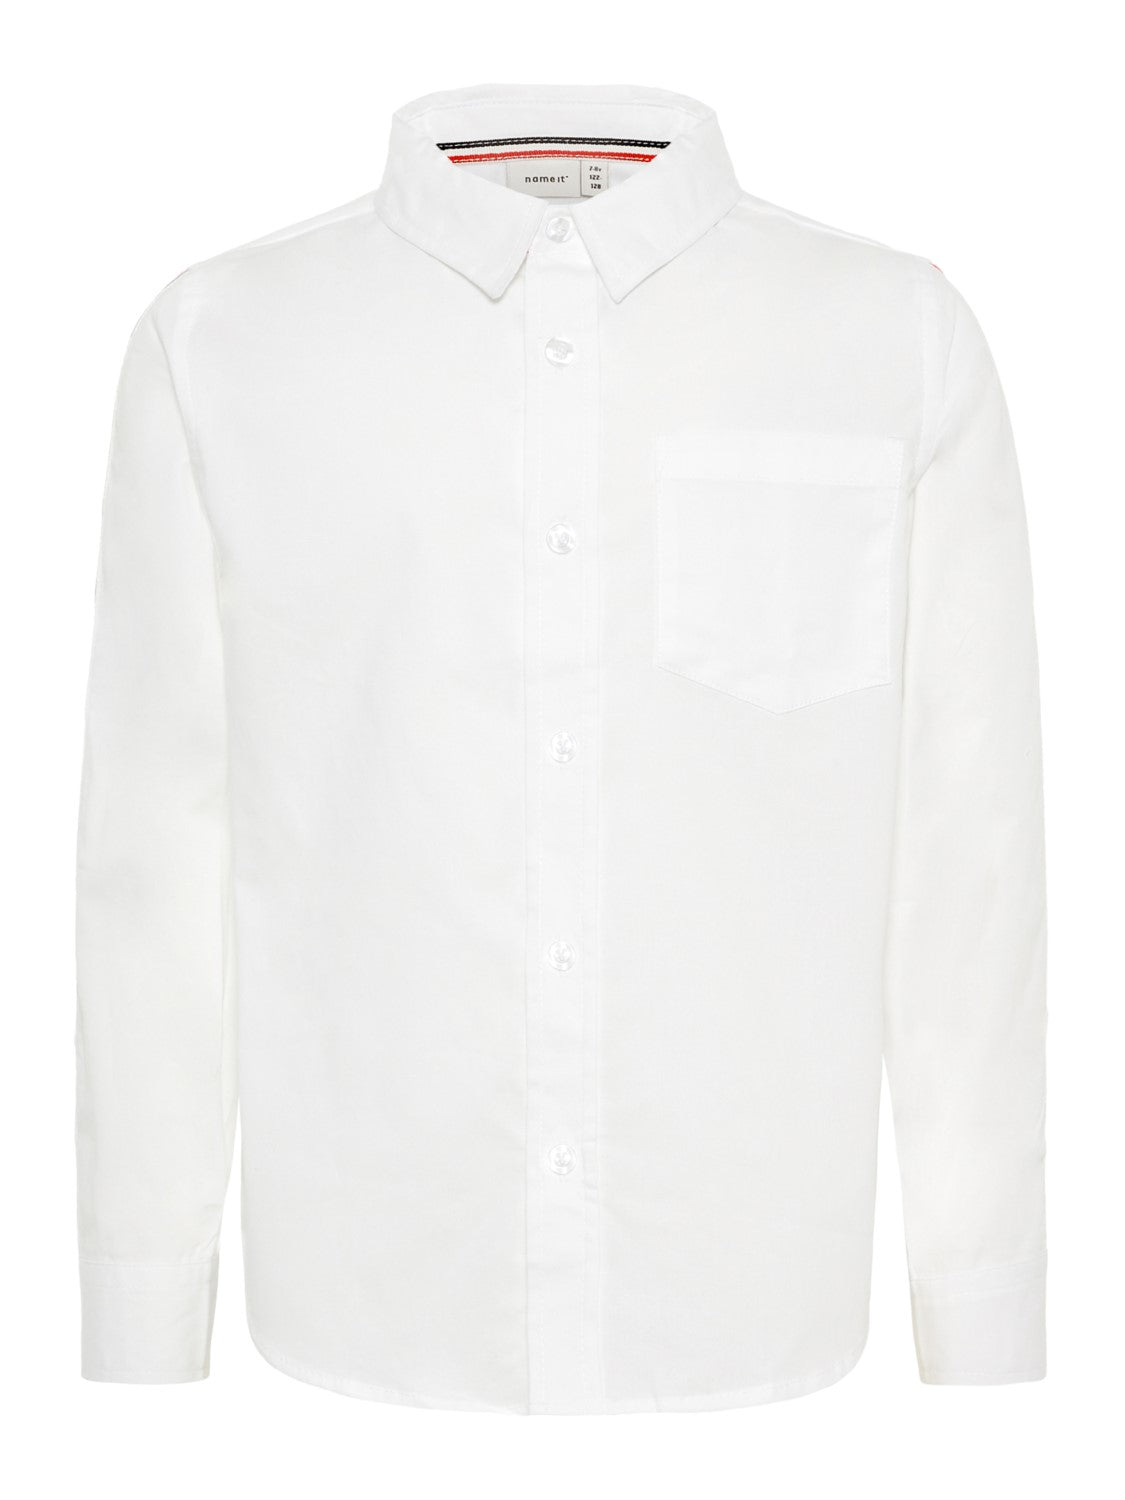 Name it Boys Trendy White Long Sleeve Shirt